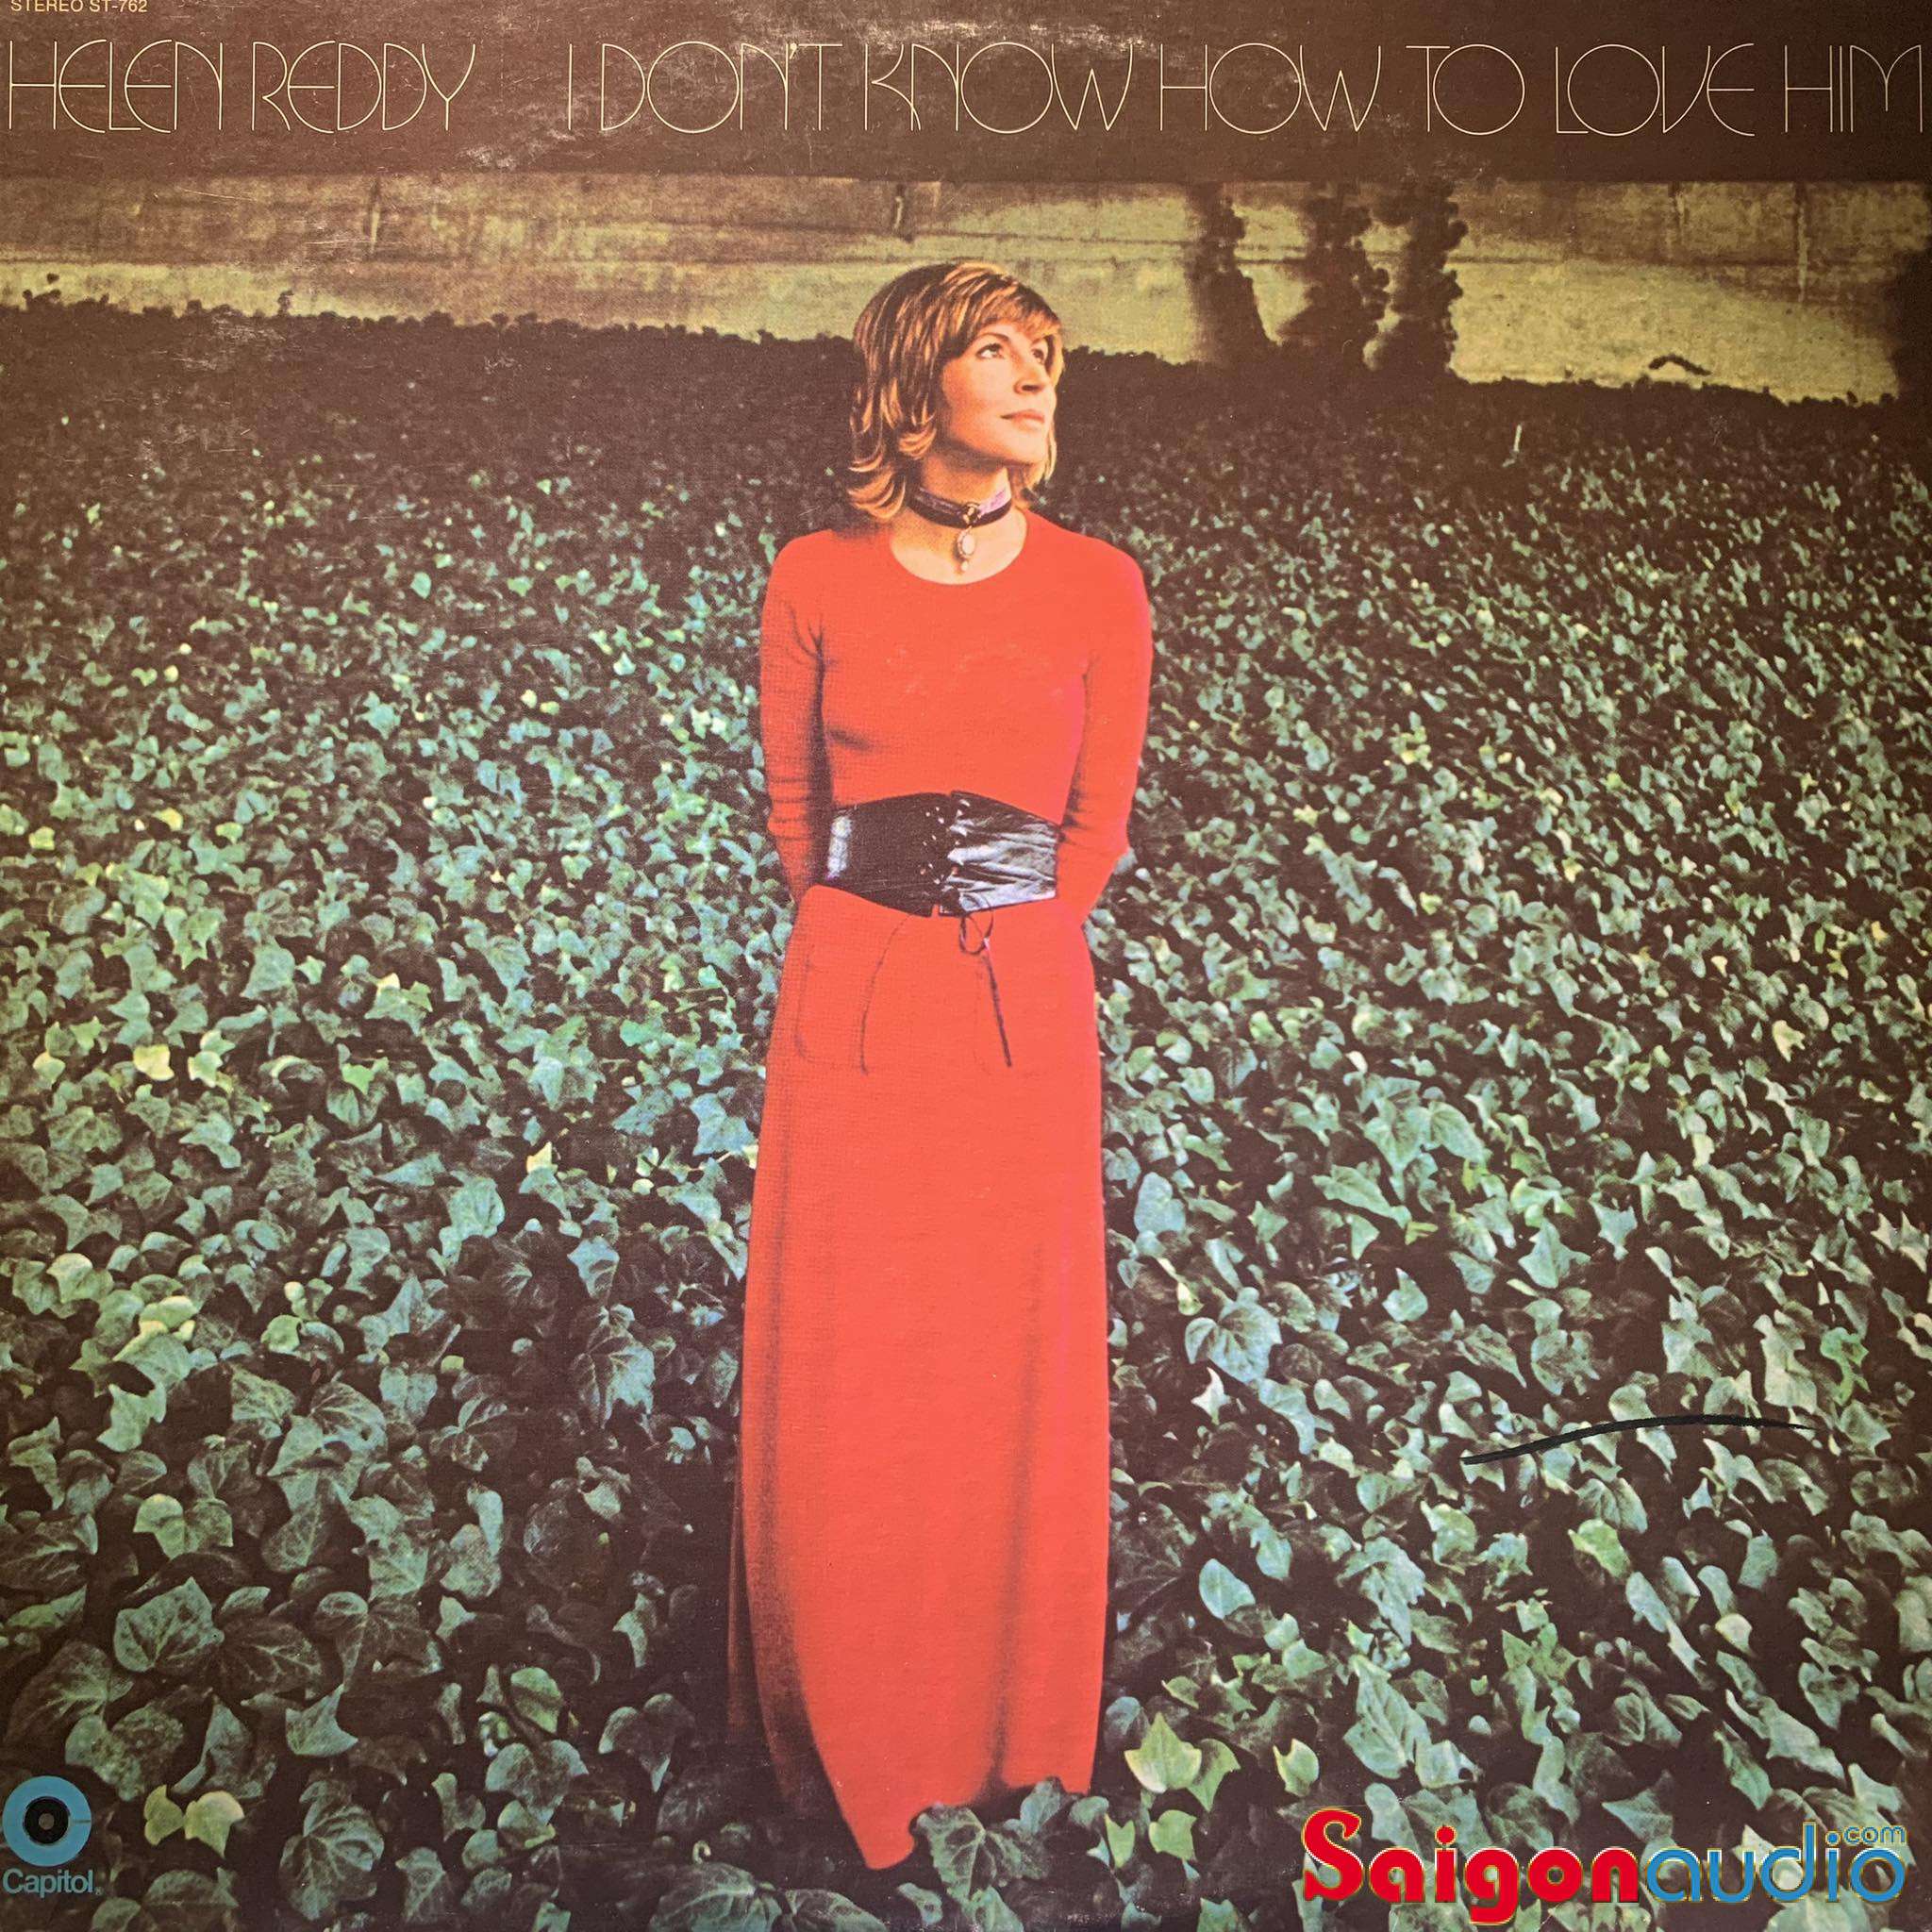 Đĩa than Helen Reddy - I Dont Know How To Love Him | LP Vinyl Records